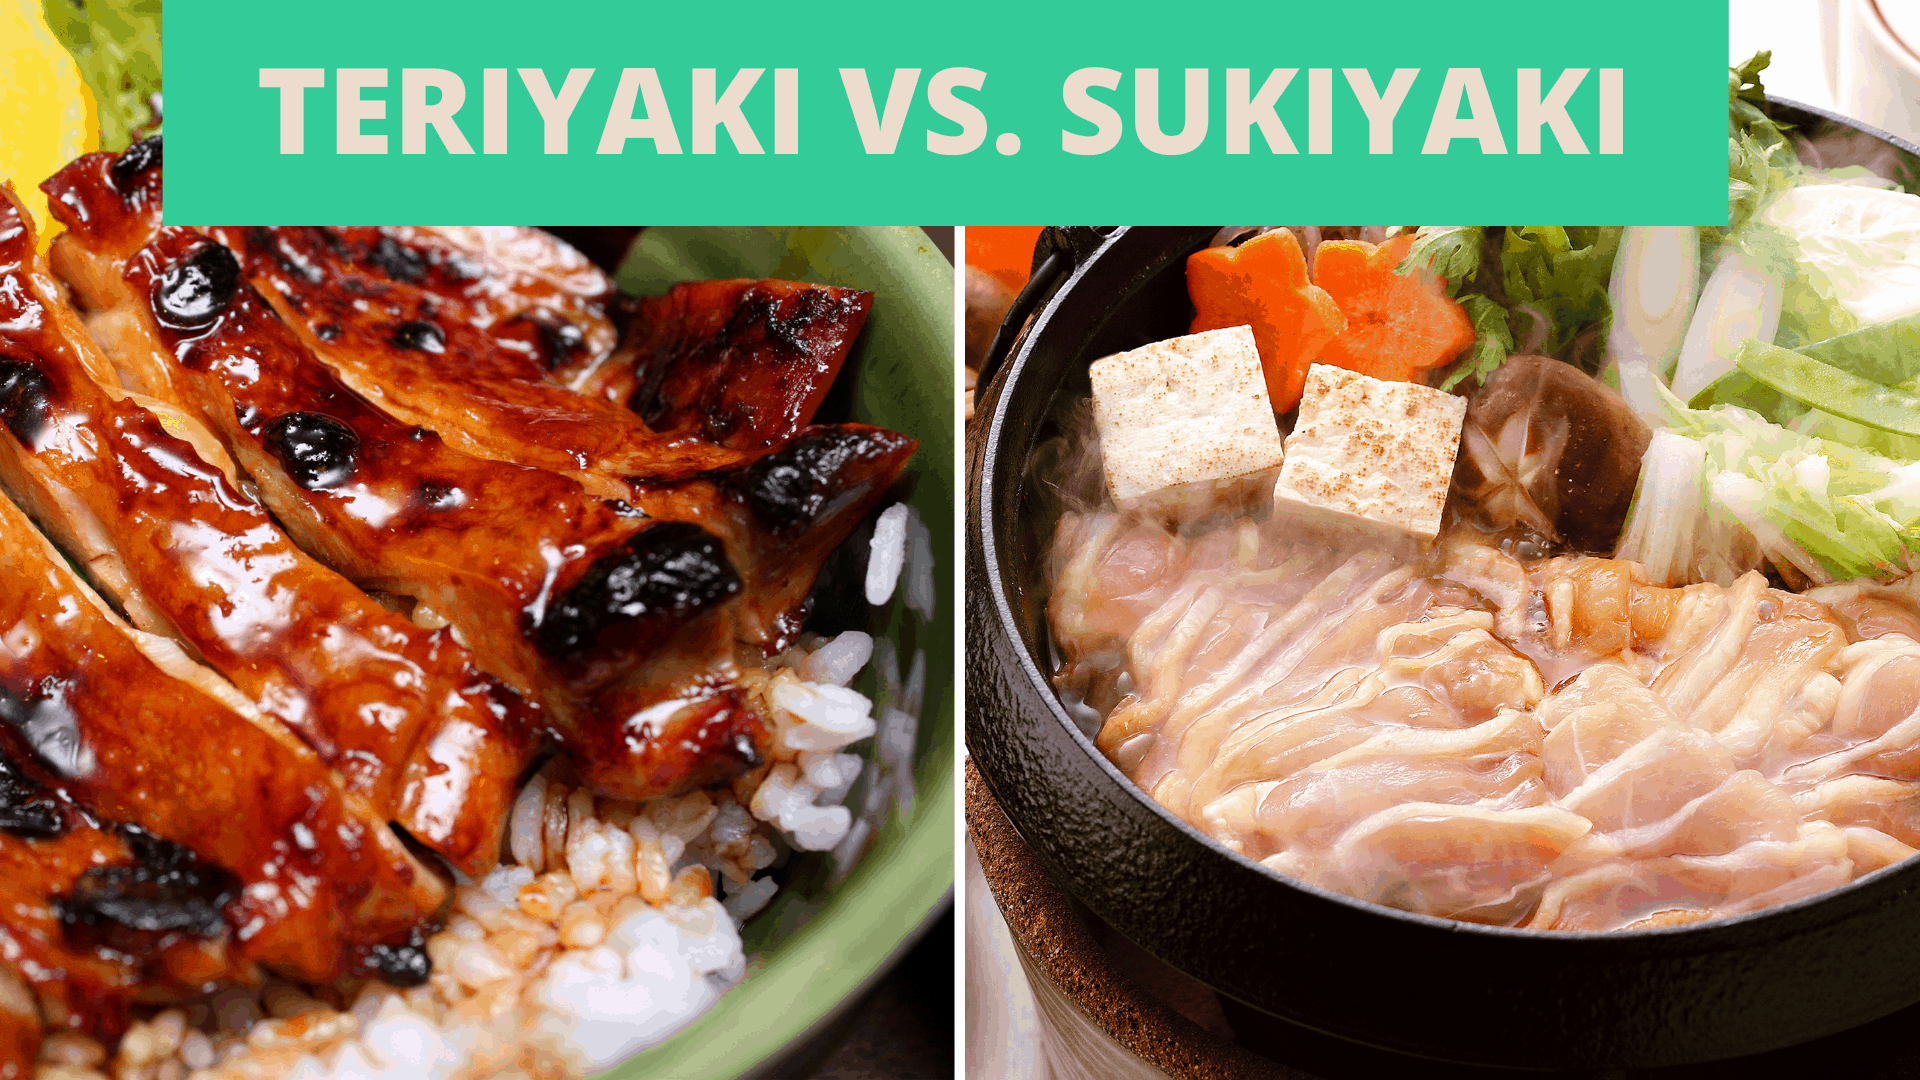 Comparación de teriyaki vs sukiyaki entre estos dos platos japoneses clásicos